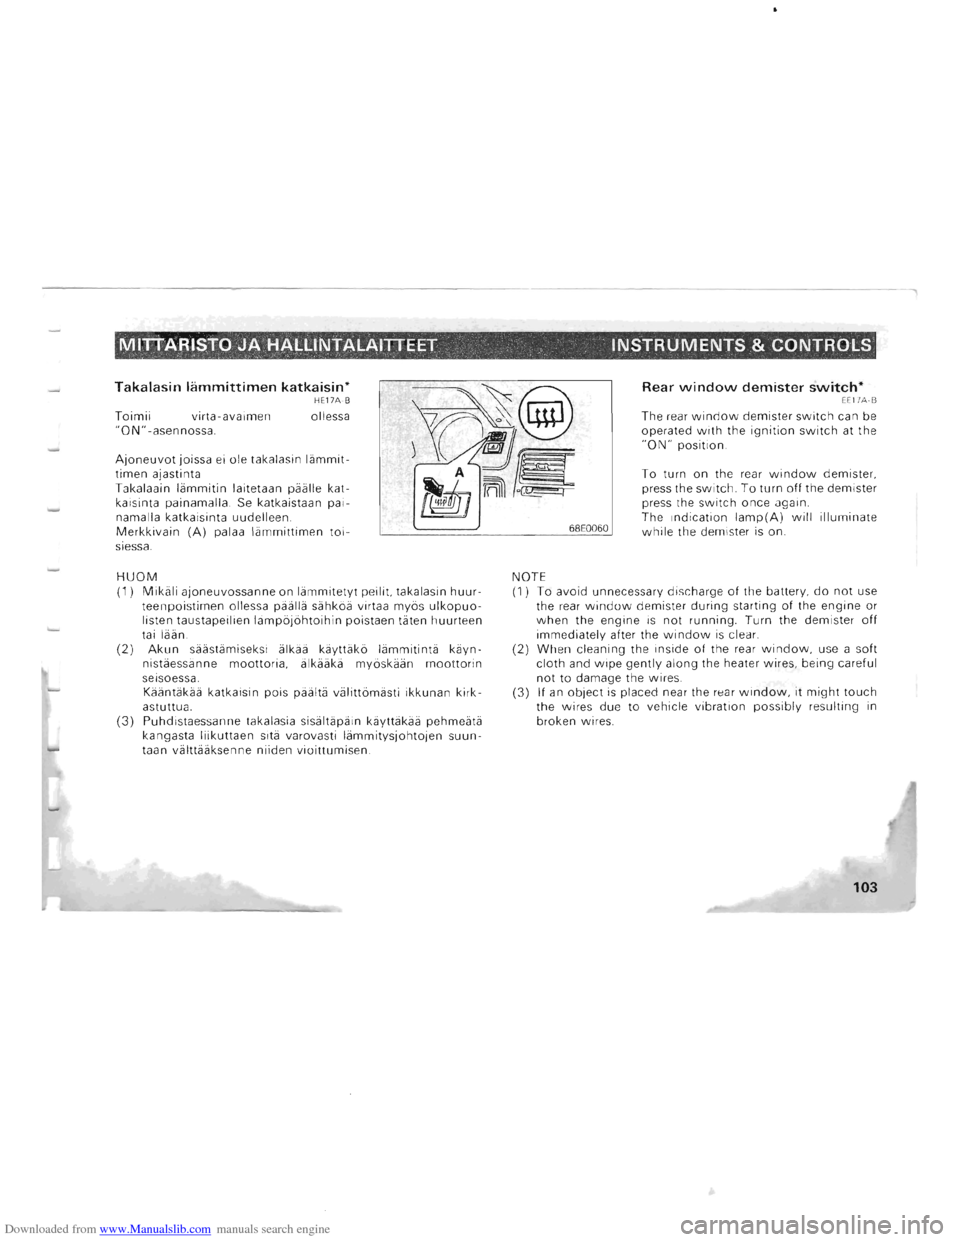 MITSUBISHI PAJERO 1996 2.G Owners Manual Downloaded from www.Manualslib.com manuals search engine MITIARISTO JA HALLINTALAITIEET INSTRUMENTS & CONTROLS " , .. " -, 
Takalasin lammittimen katkaisin* HE17A·B 
Toimii virta-avaimen  ollessa "ON